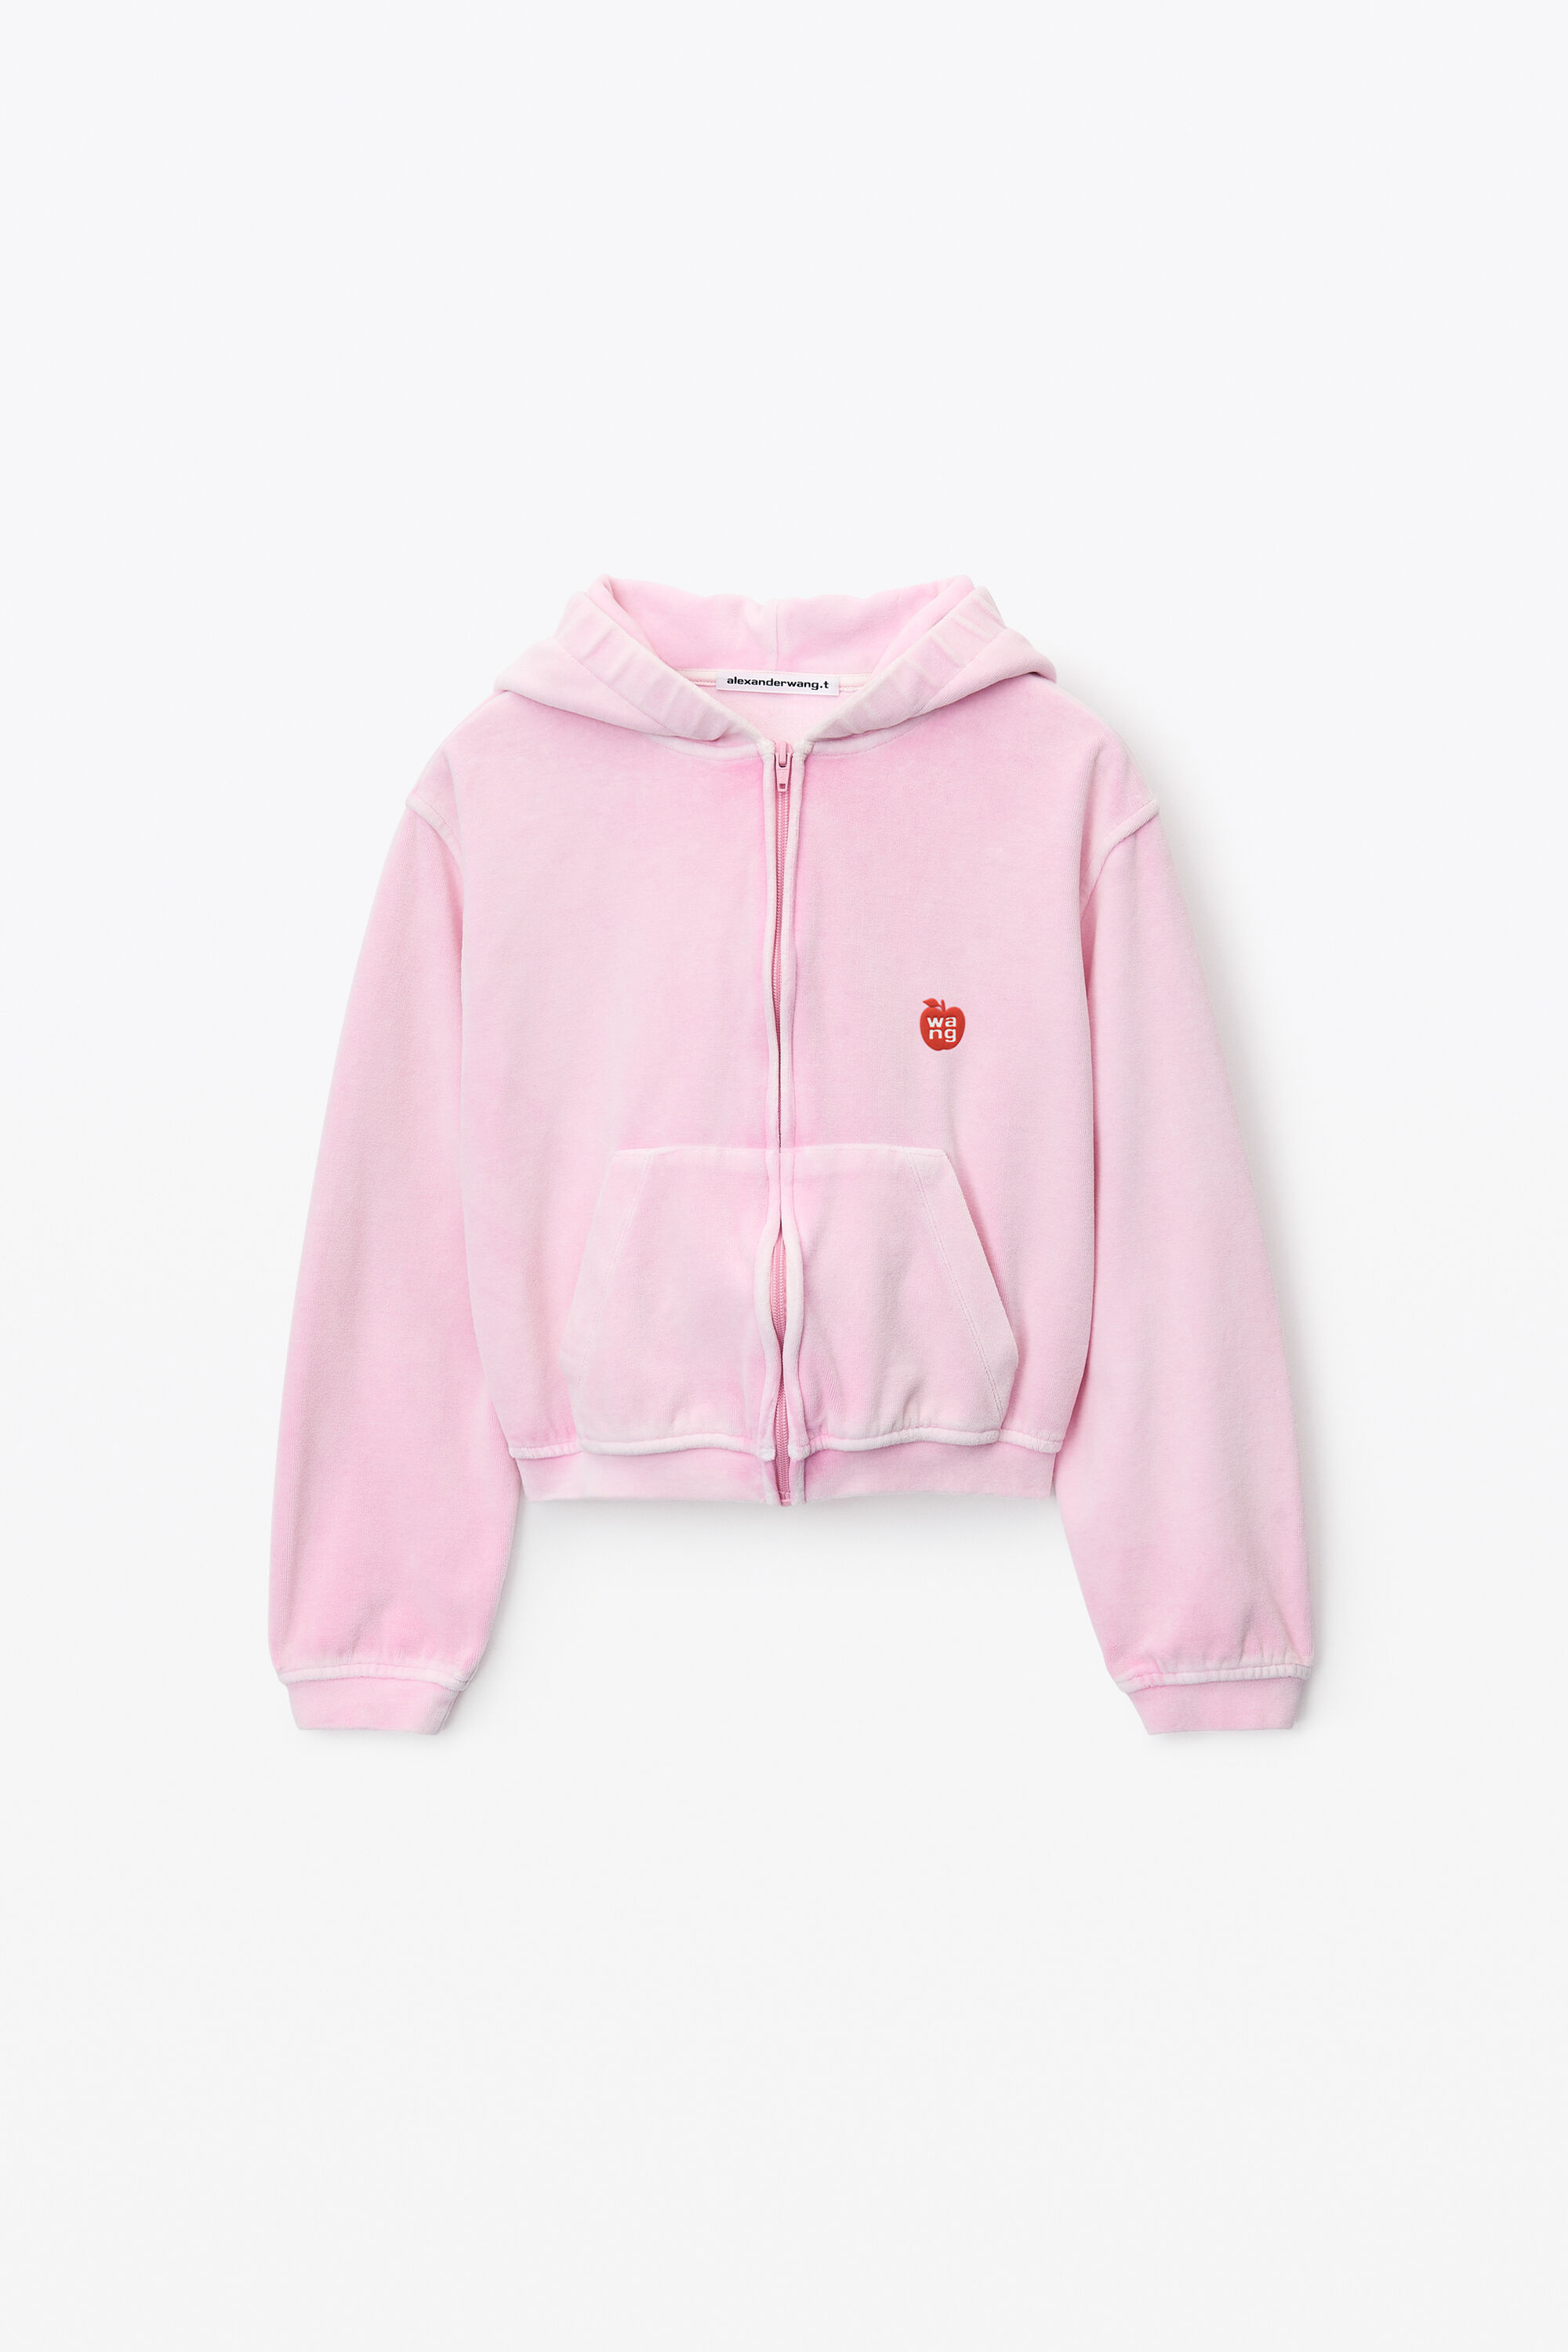 apple logo shrunken zip up hoodie in velour in WASHED CANDY PINK 